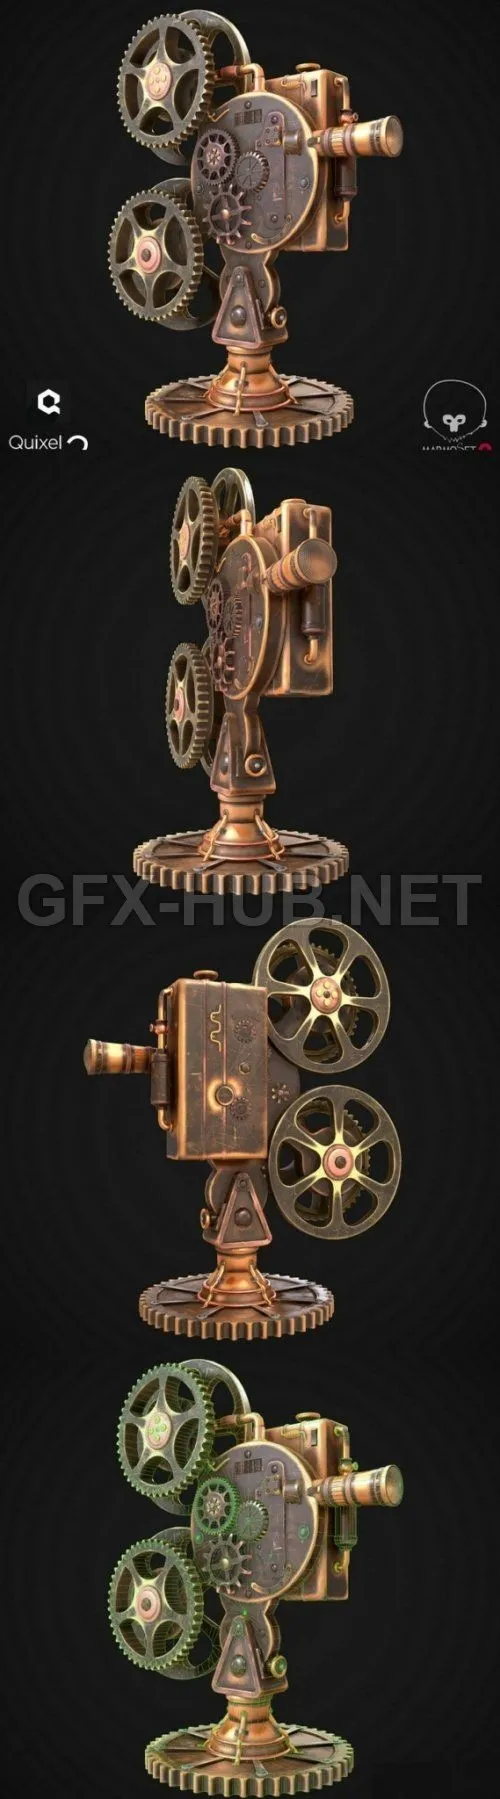 PBR Game 3D Model – Steampunk Projector PBR